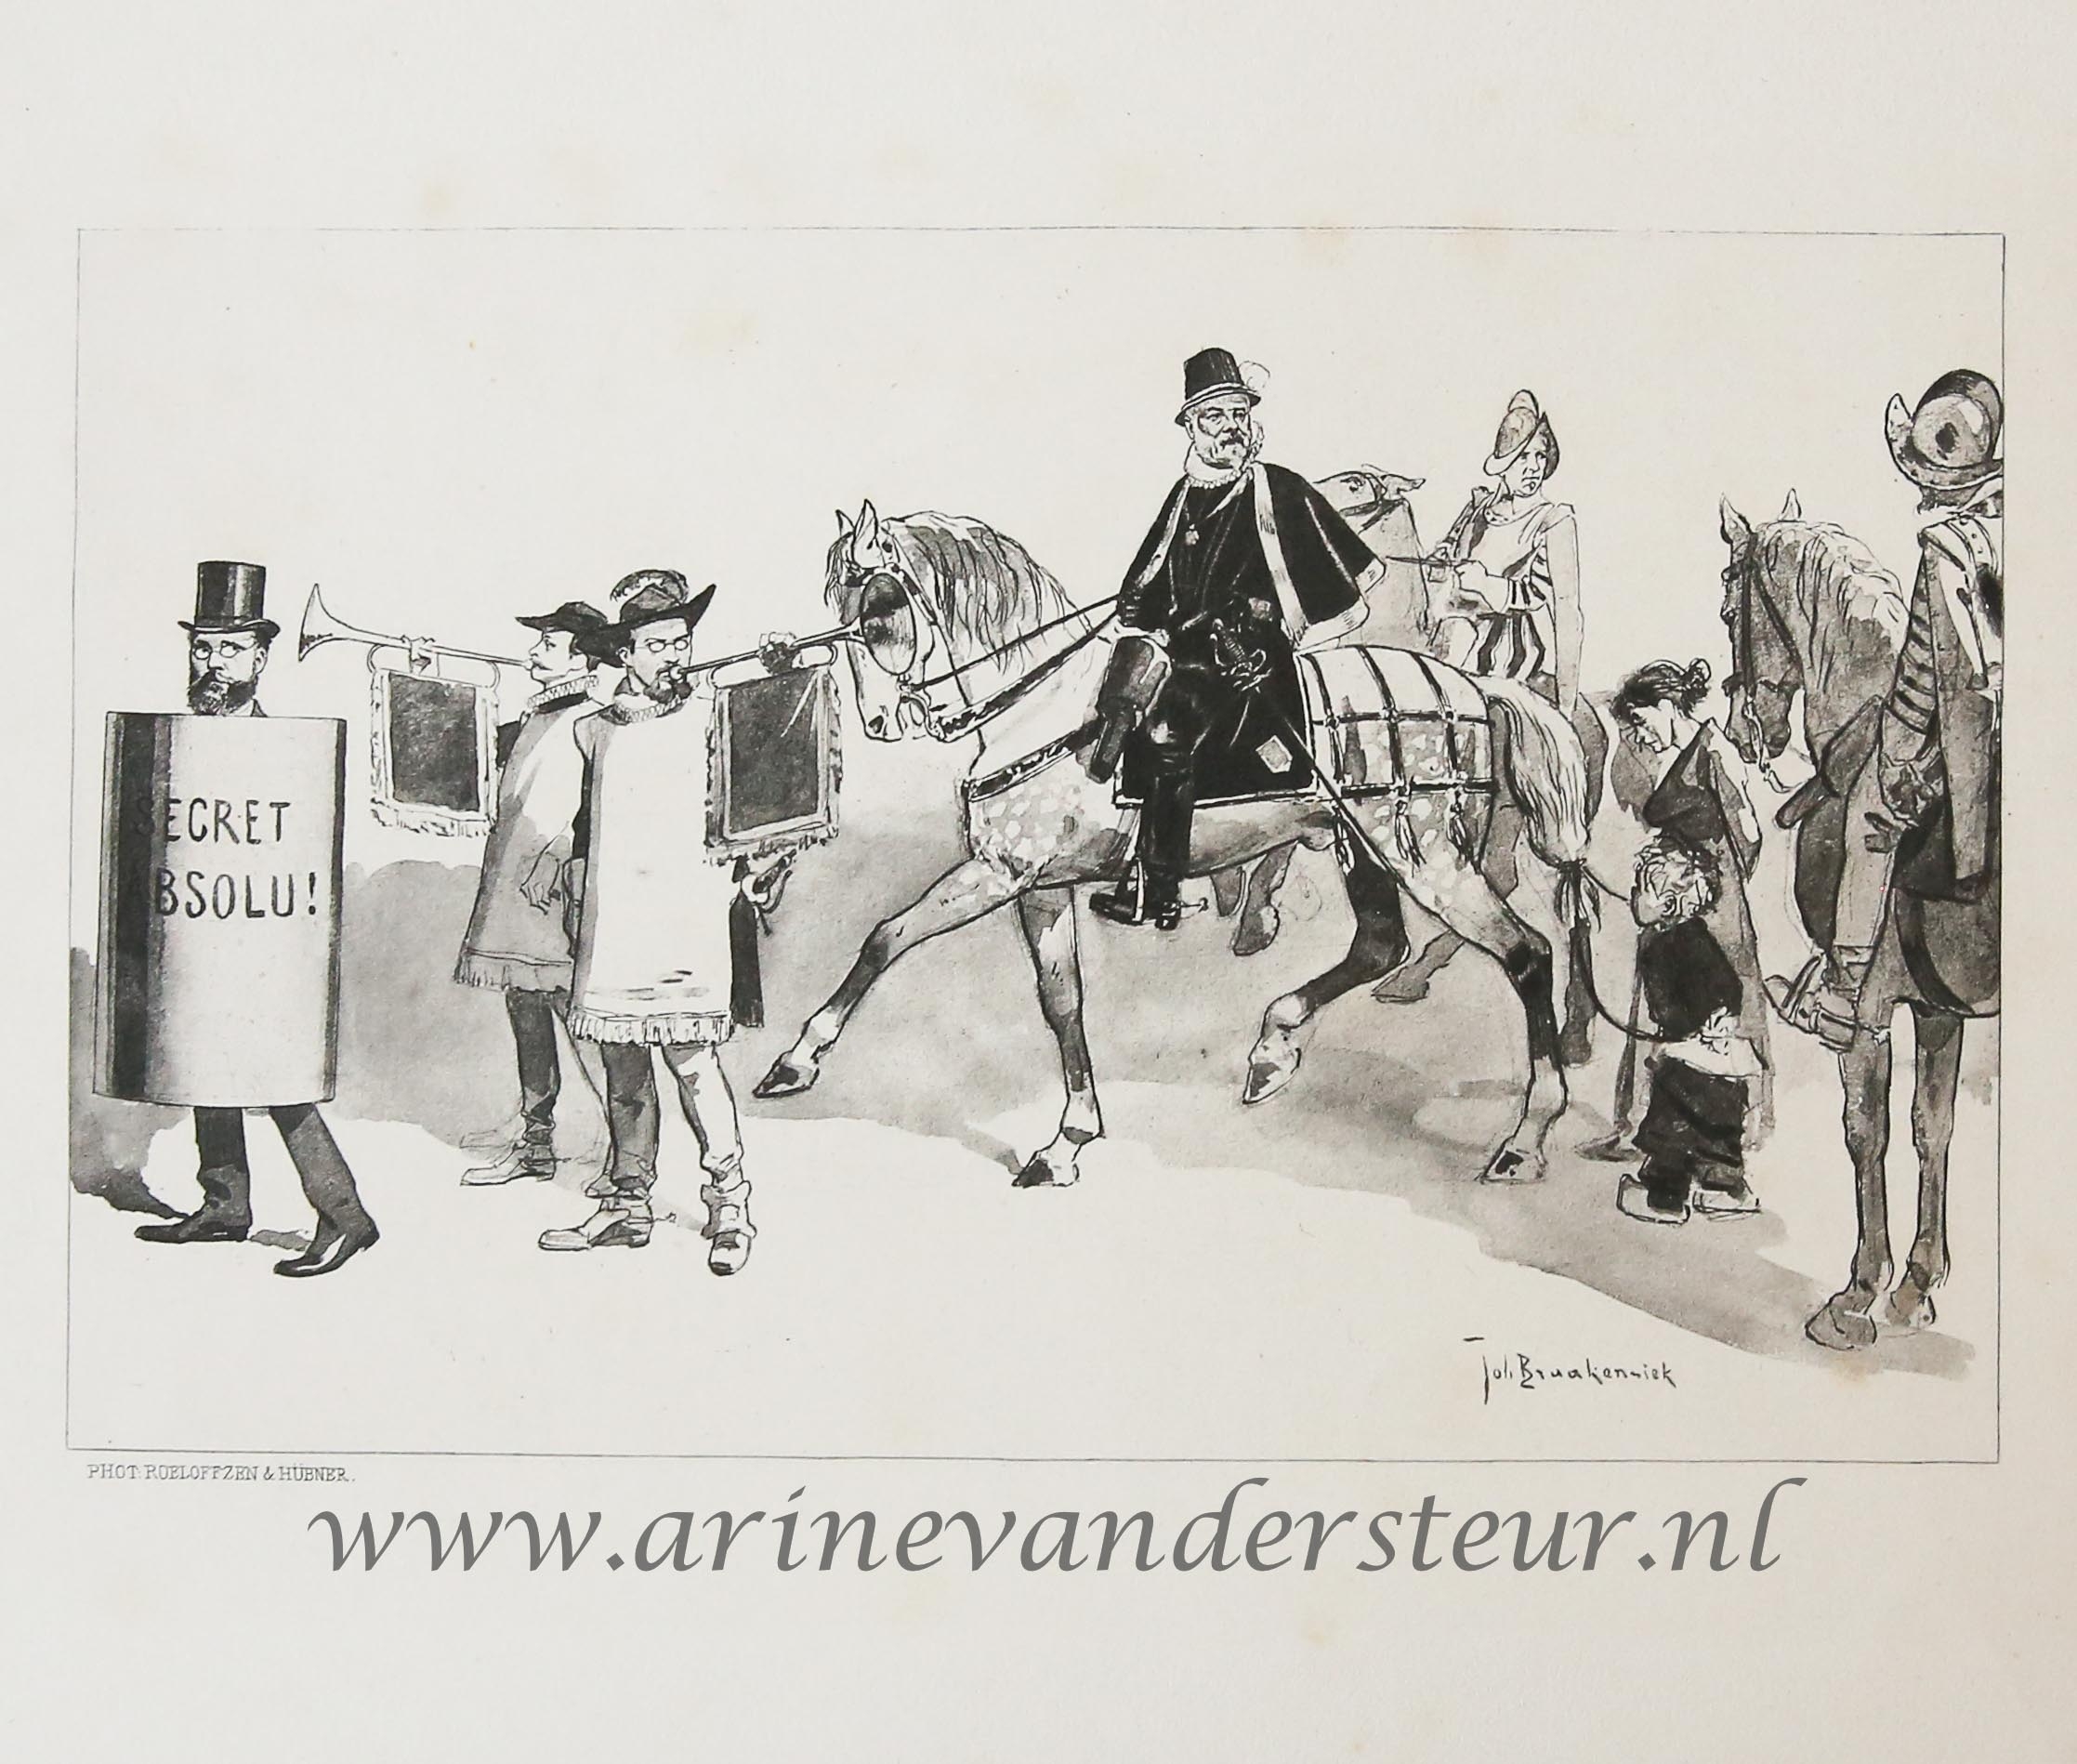 [Original lithograph/lithografie by Johan Braakensiek] Secret Absolu! Optocht met paarden en trompetten. 1 p.